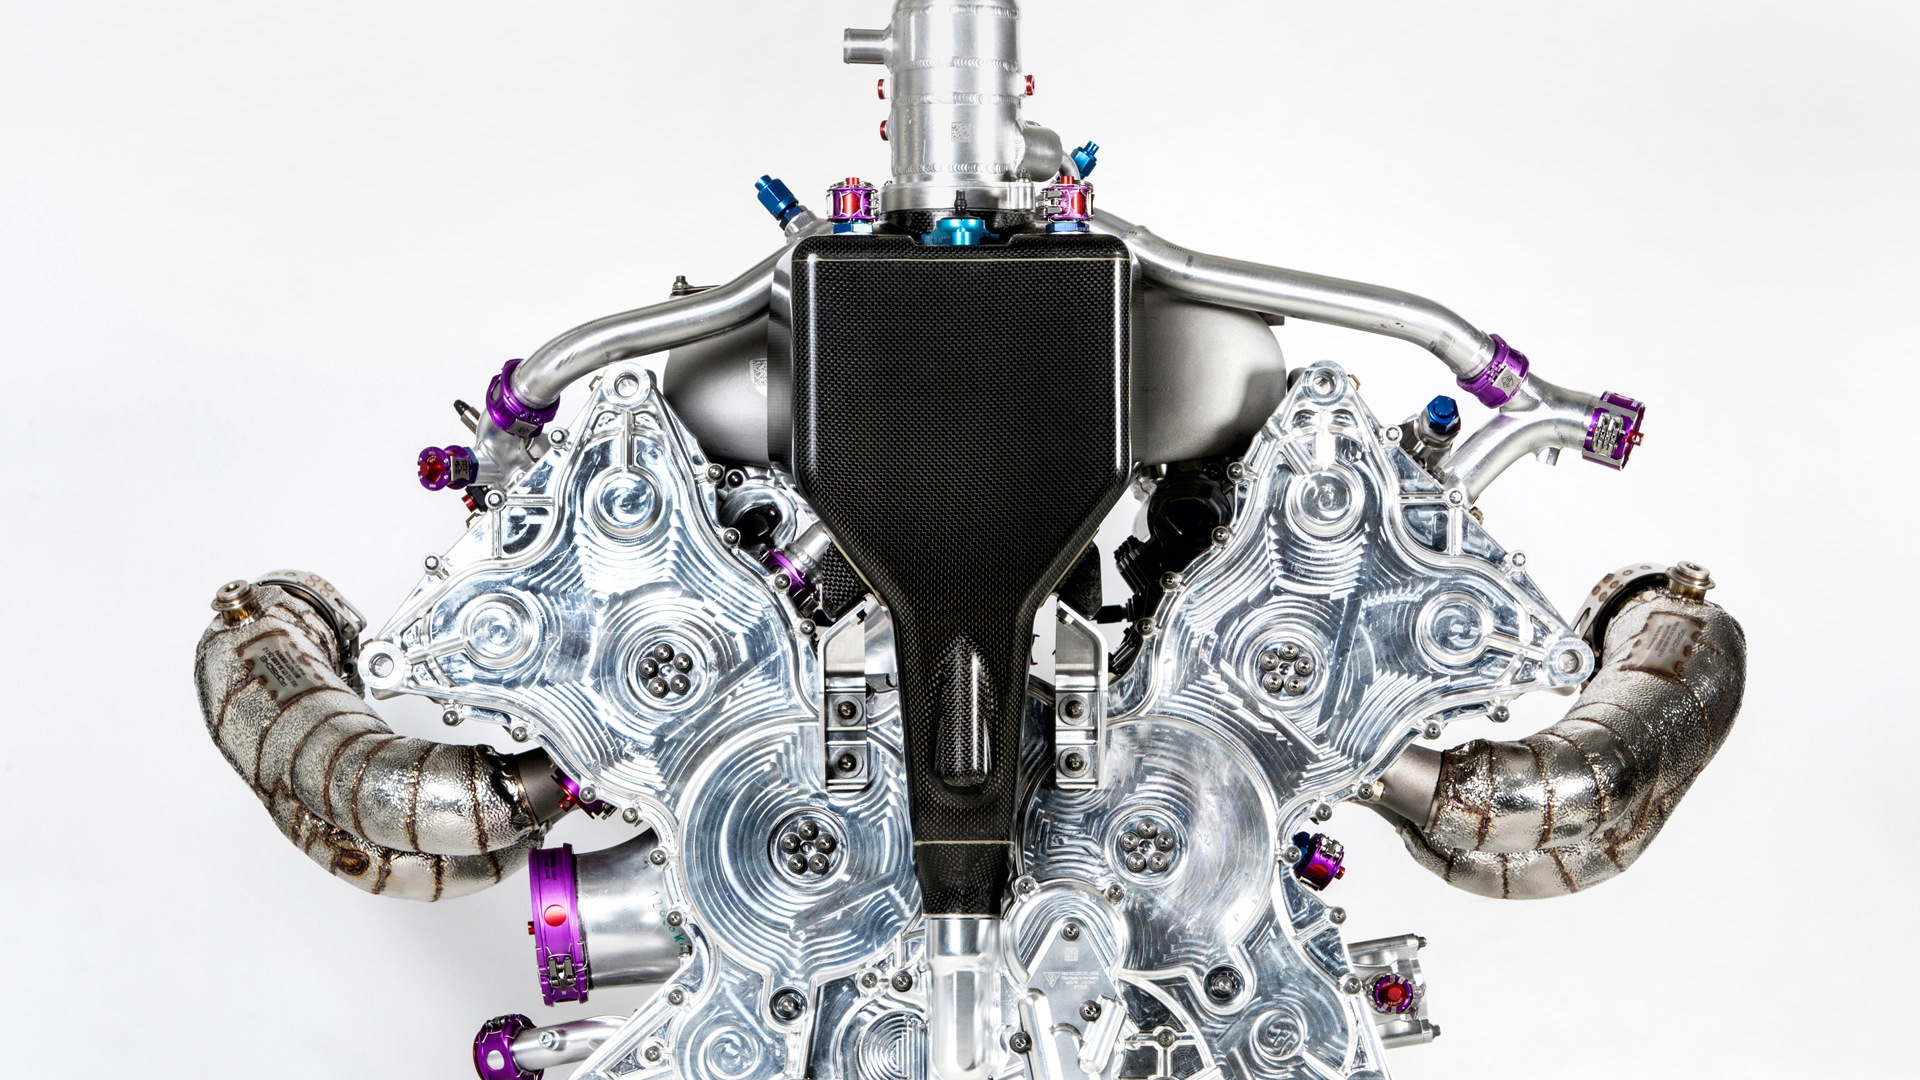 Porsche 919 Hybrid LMP1 race car’s V-4 engine